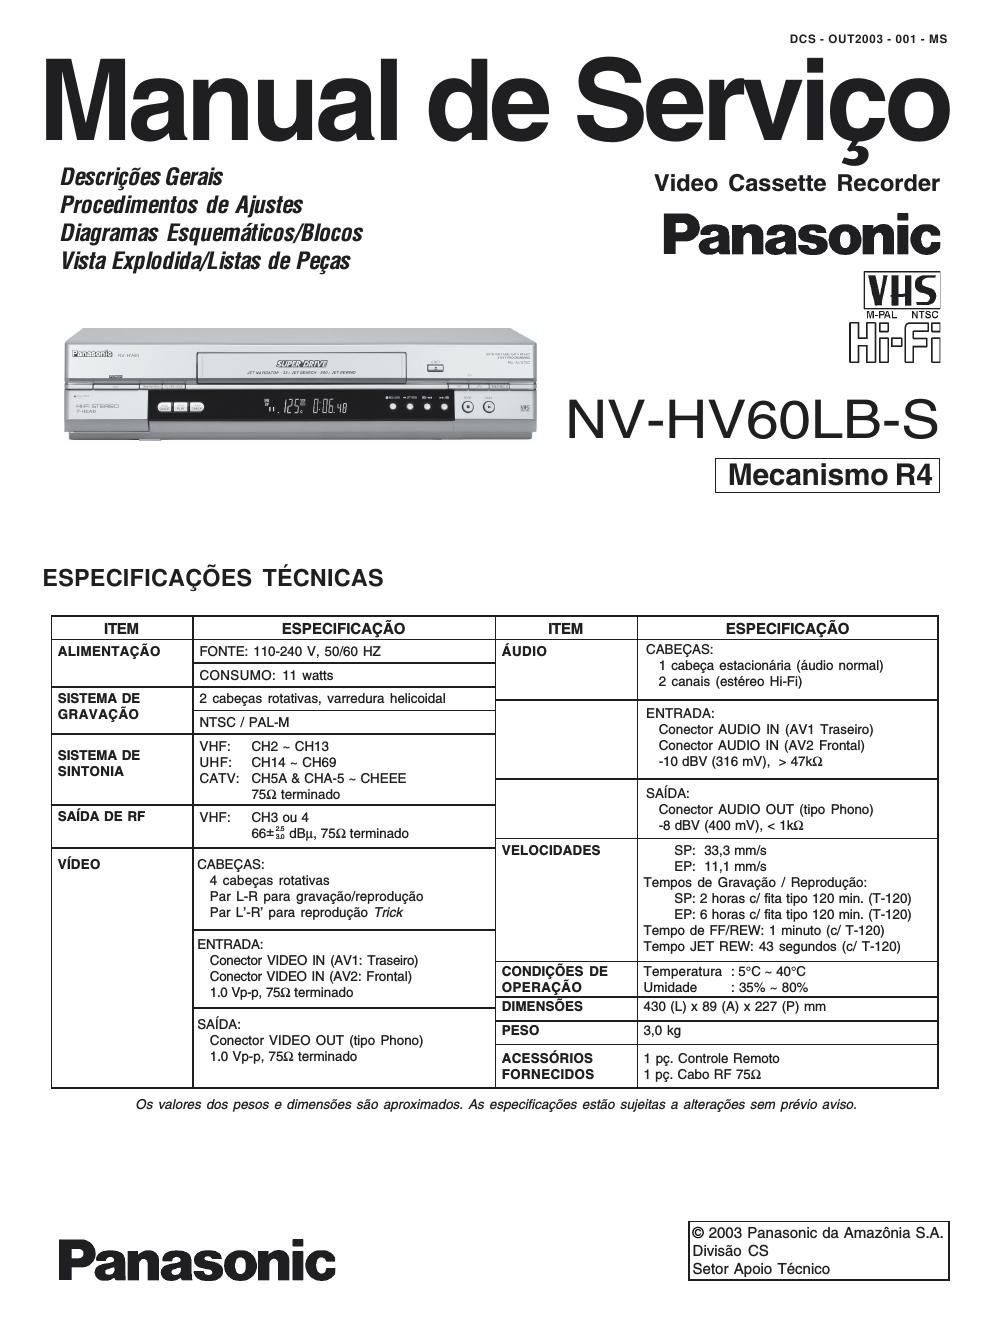 panasonic nv hv 60 lbs service manual